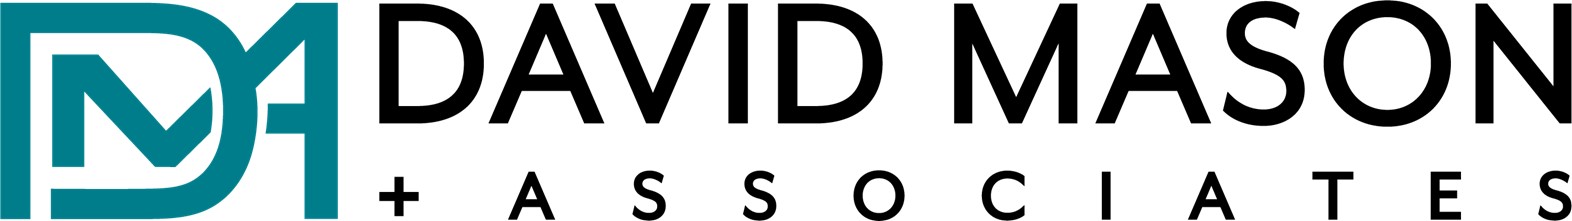 Davis Mason and Associates logo